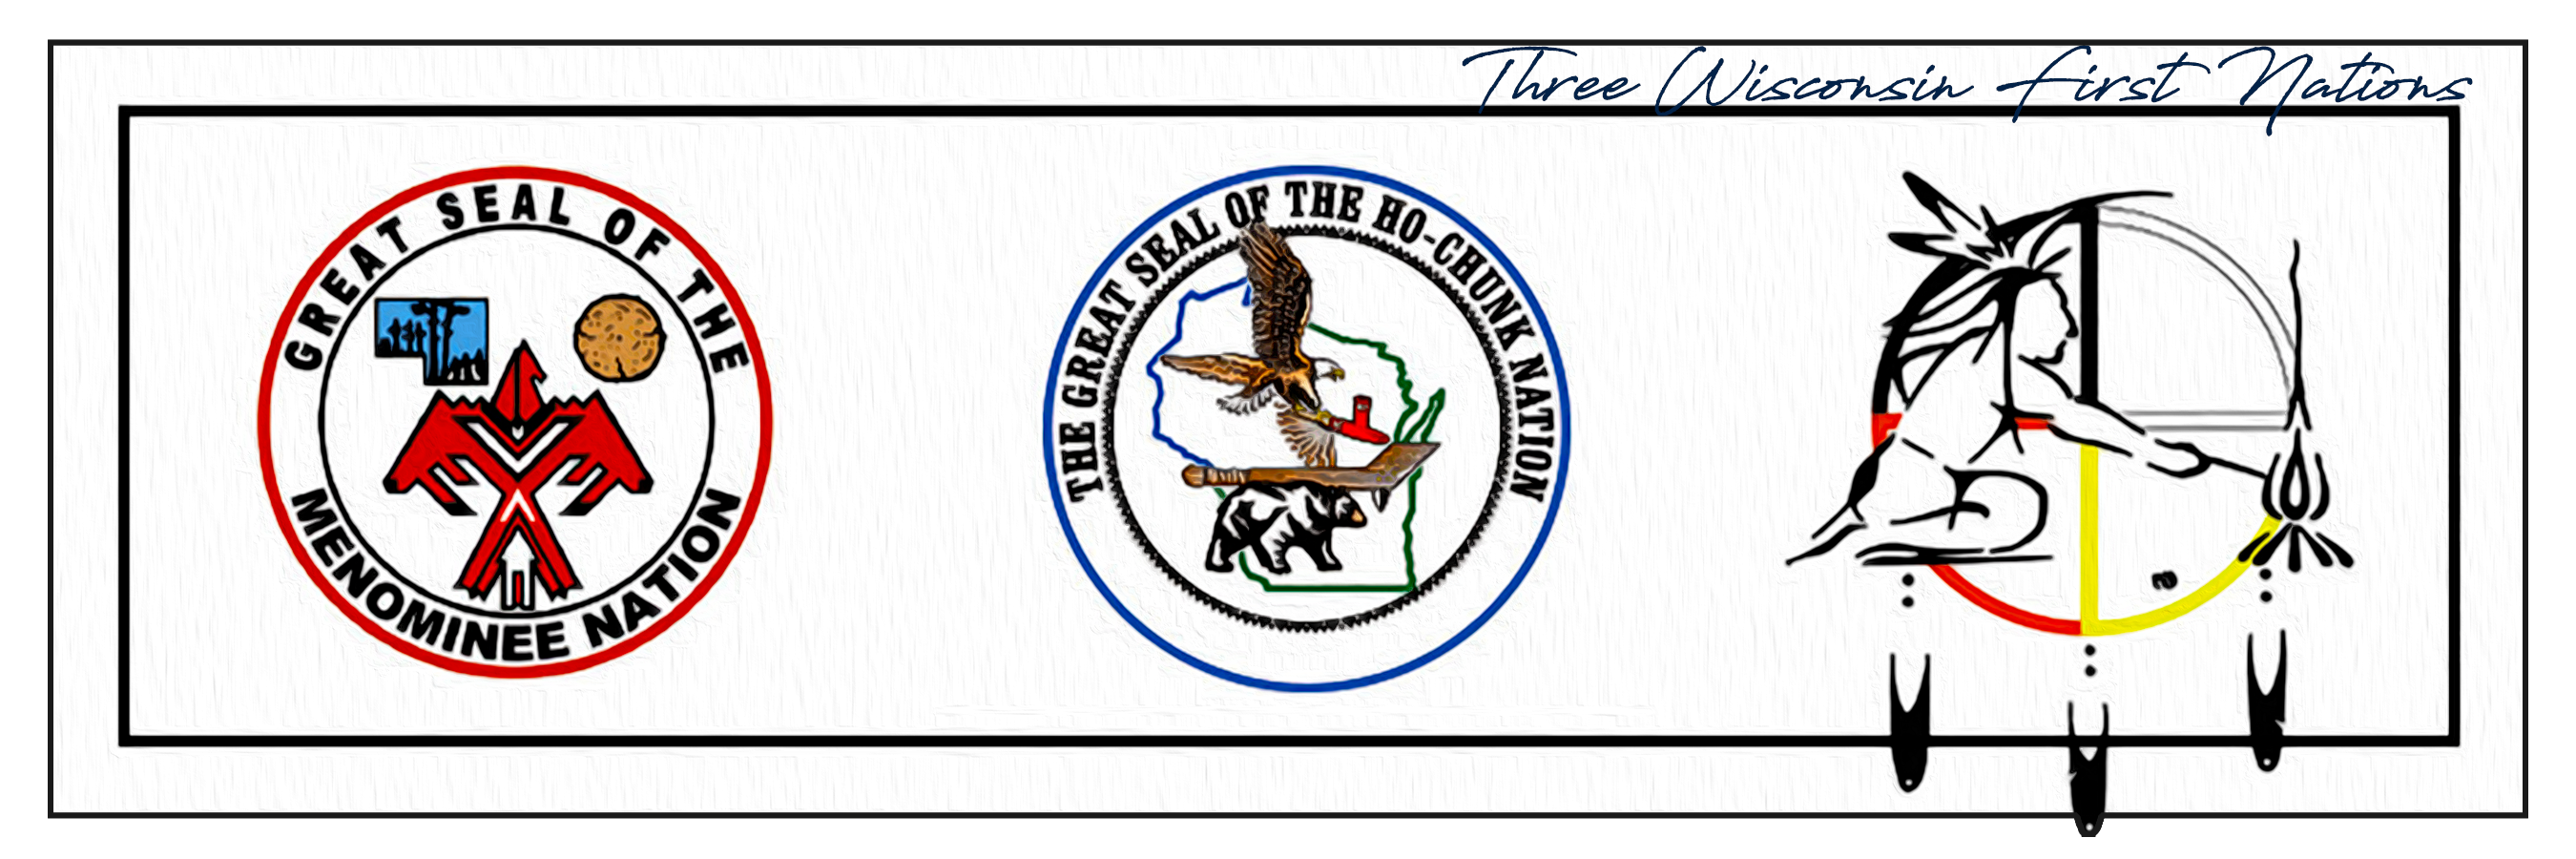 Milwaukee's Three First Nations Seals: Menominee, Ho-Chunk, & Potawatomi